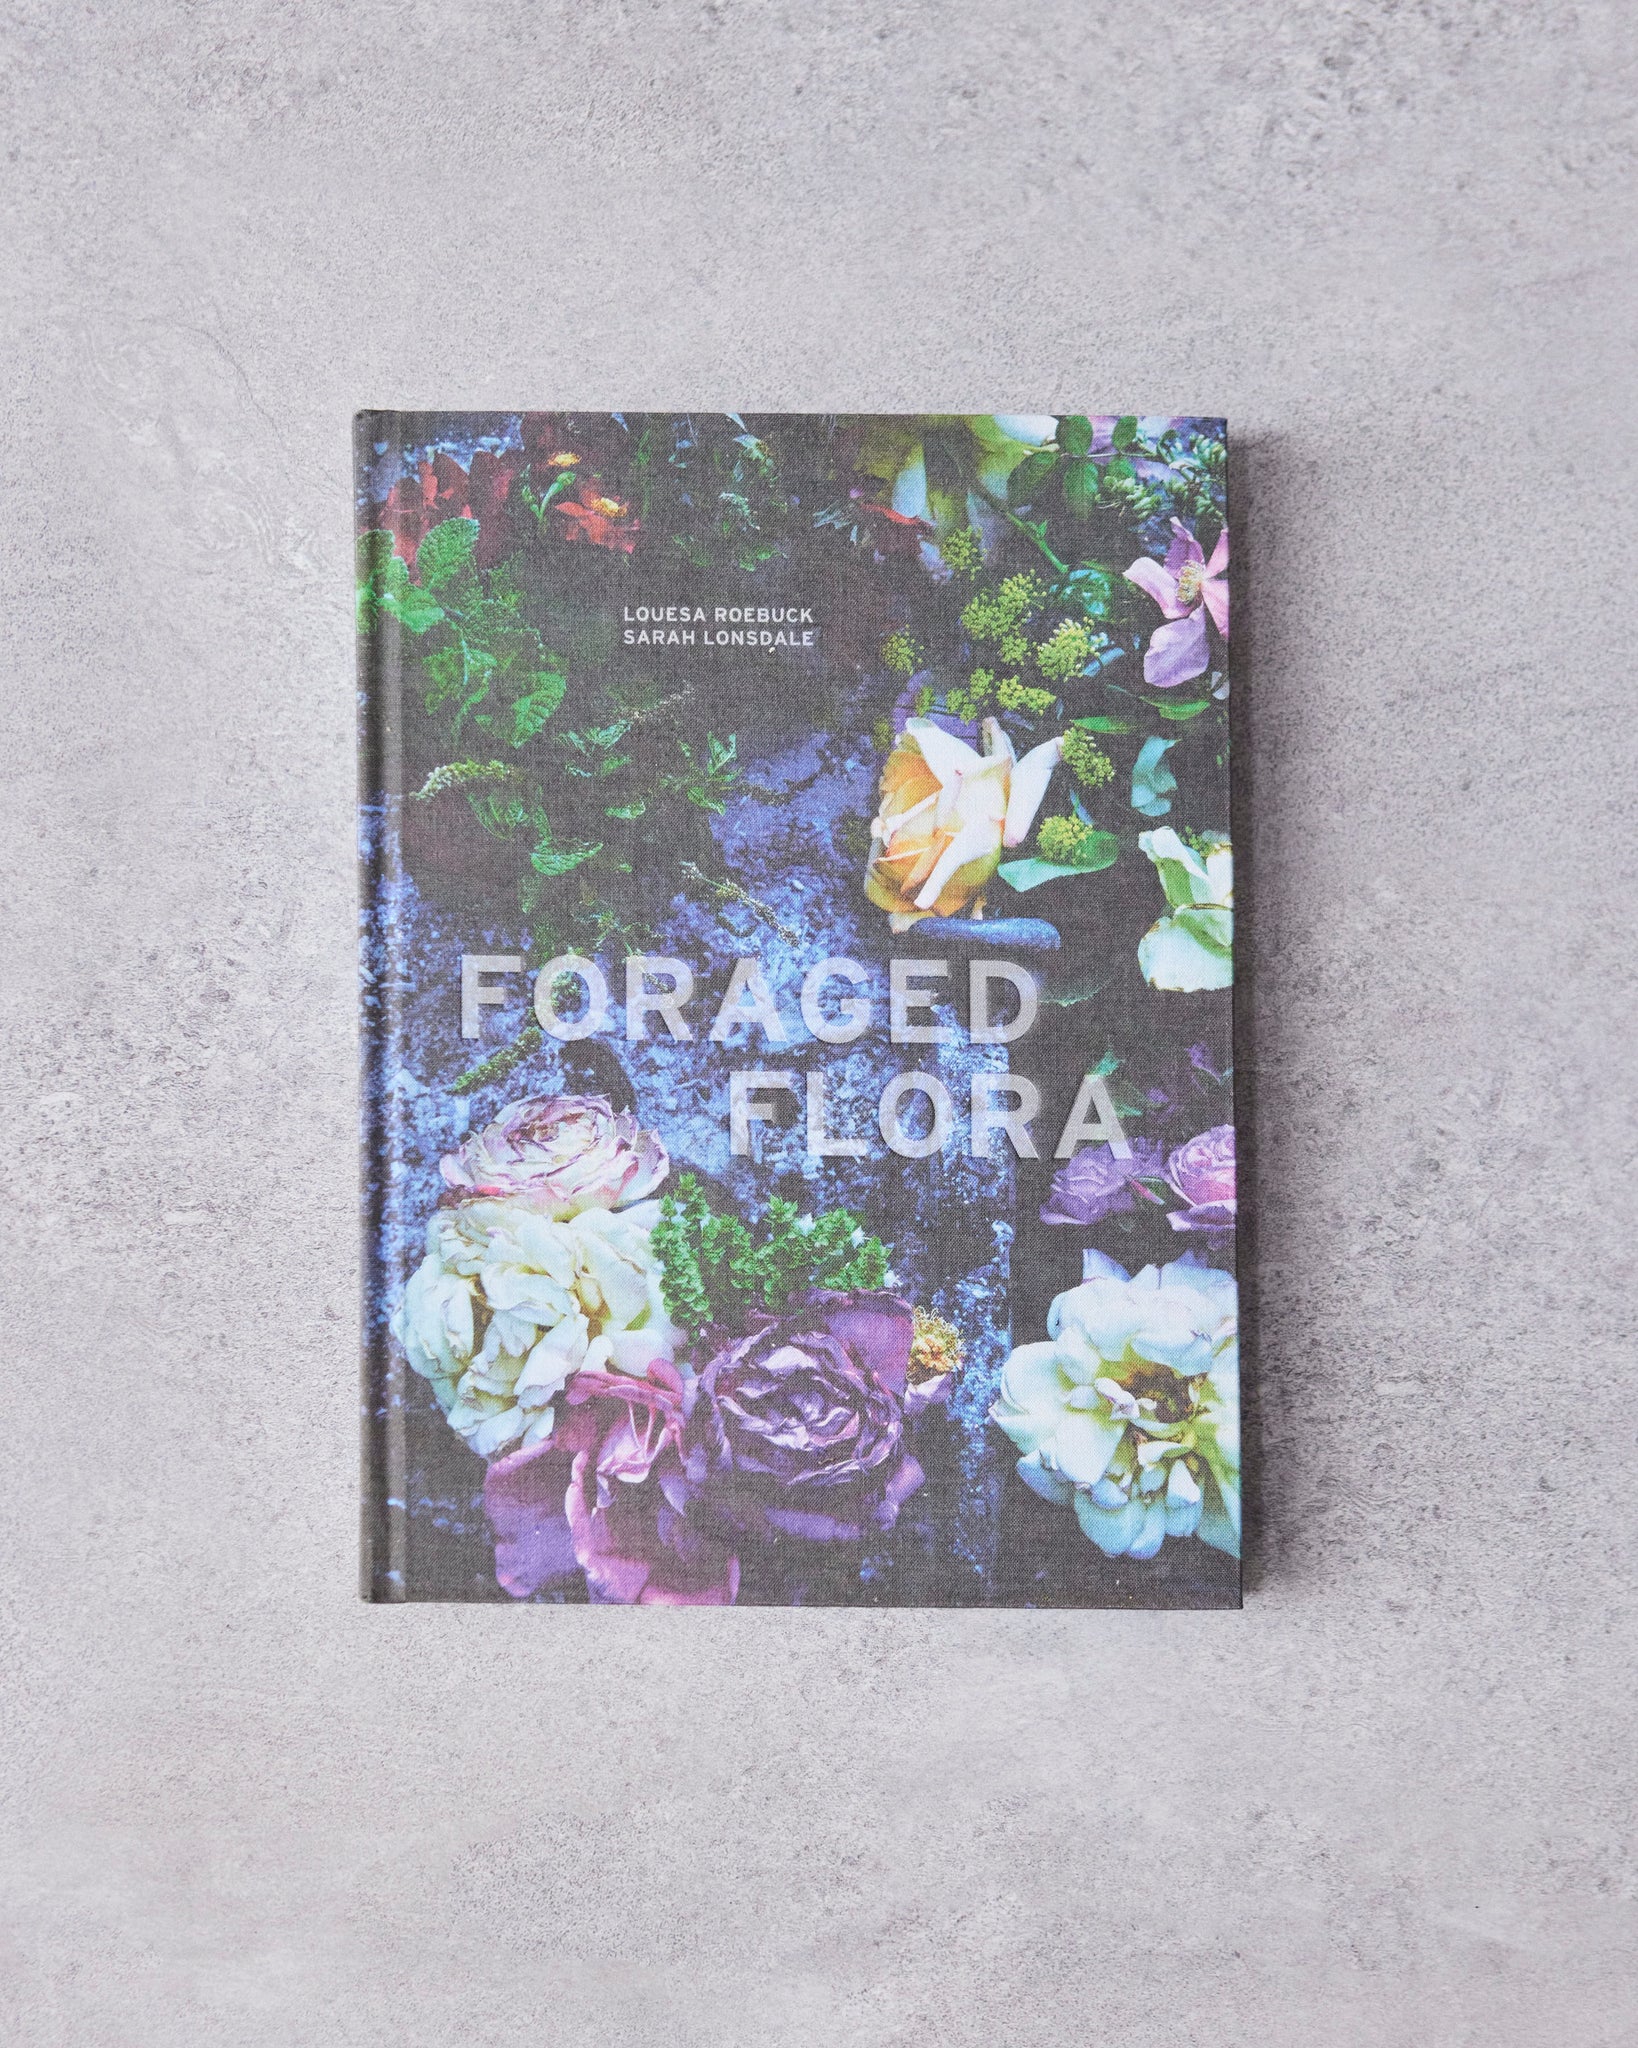 Foraged Flora by Louesa Roebuck & Sarah Lonsdale